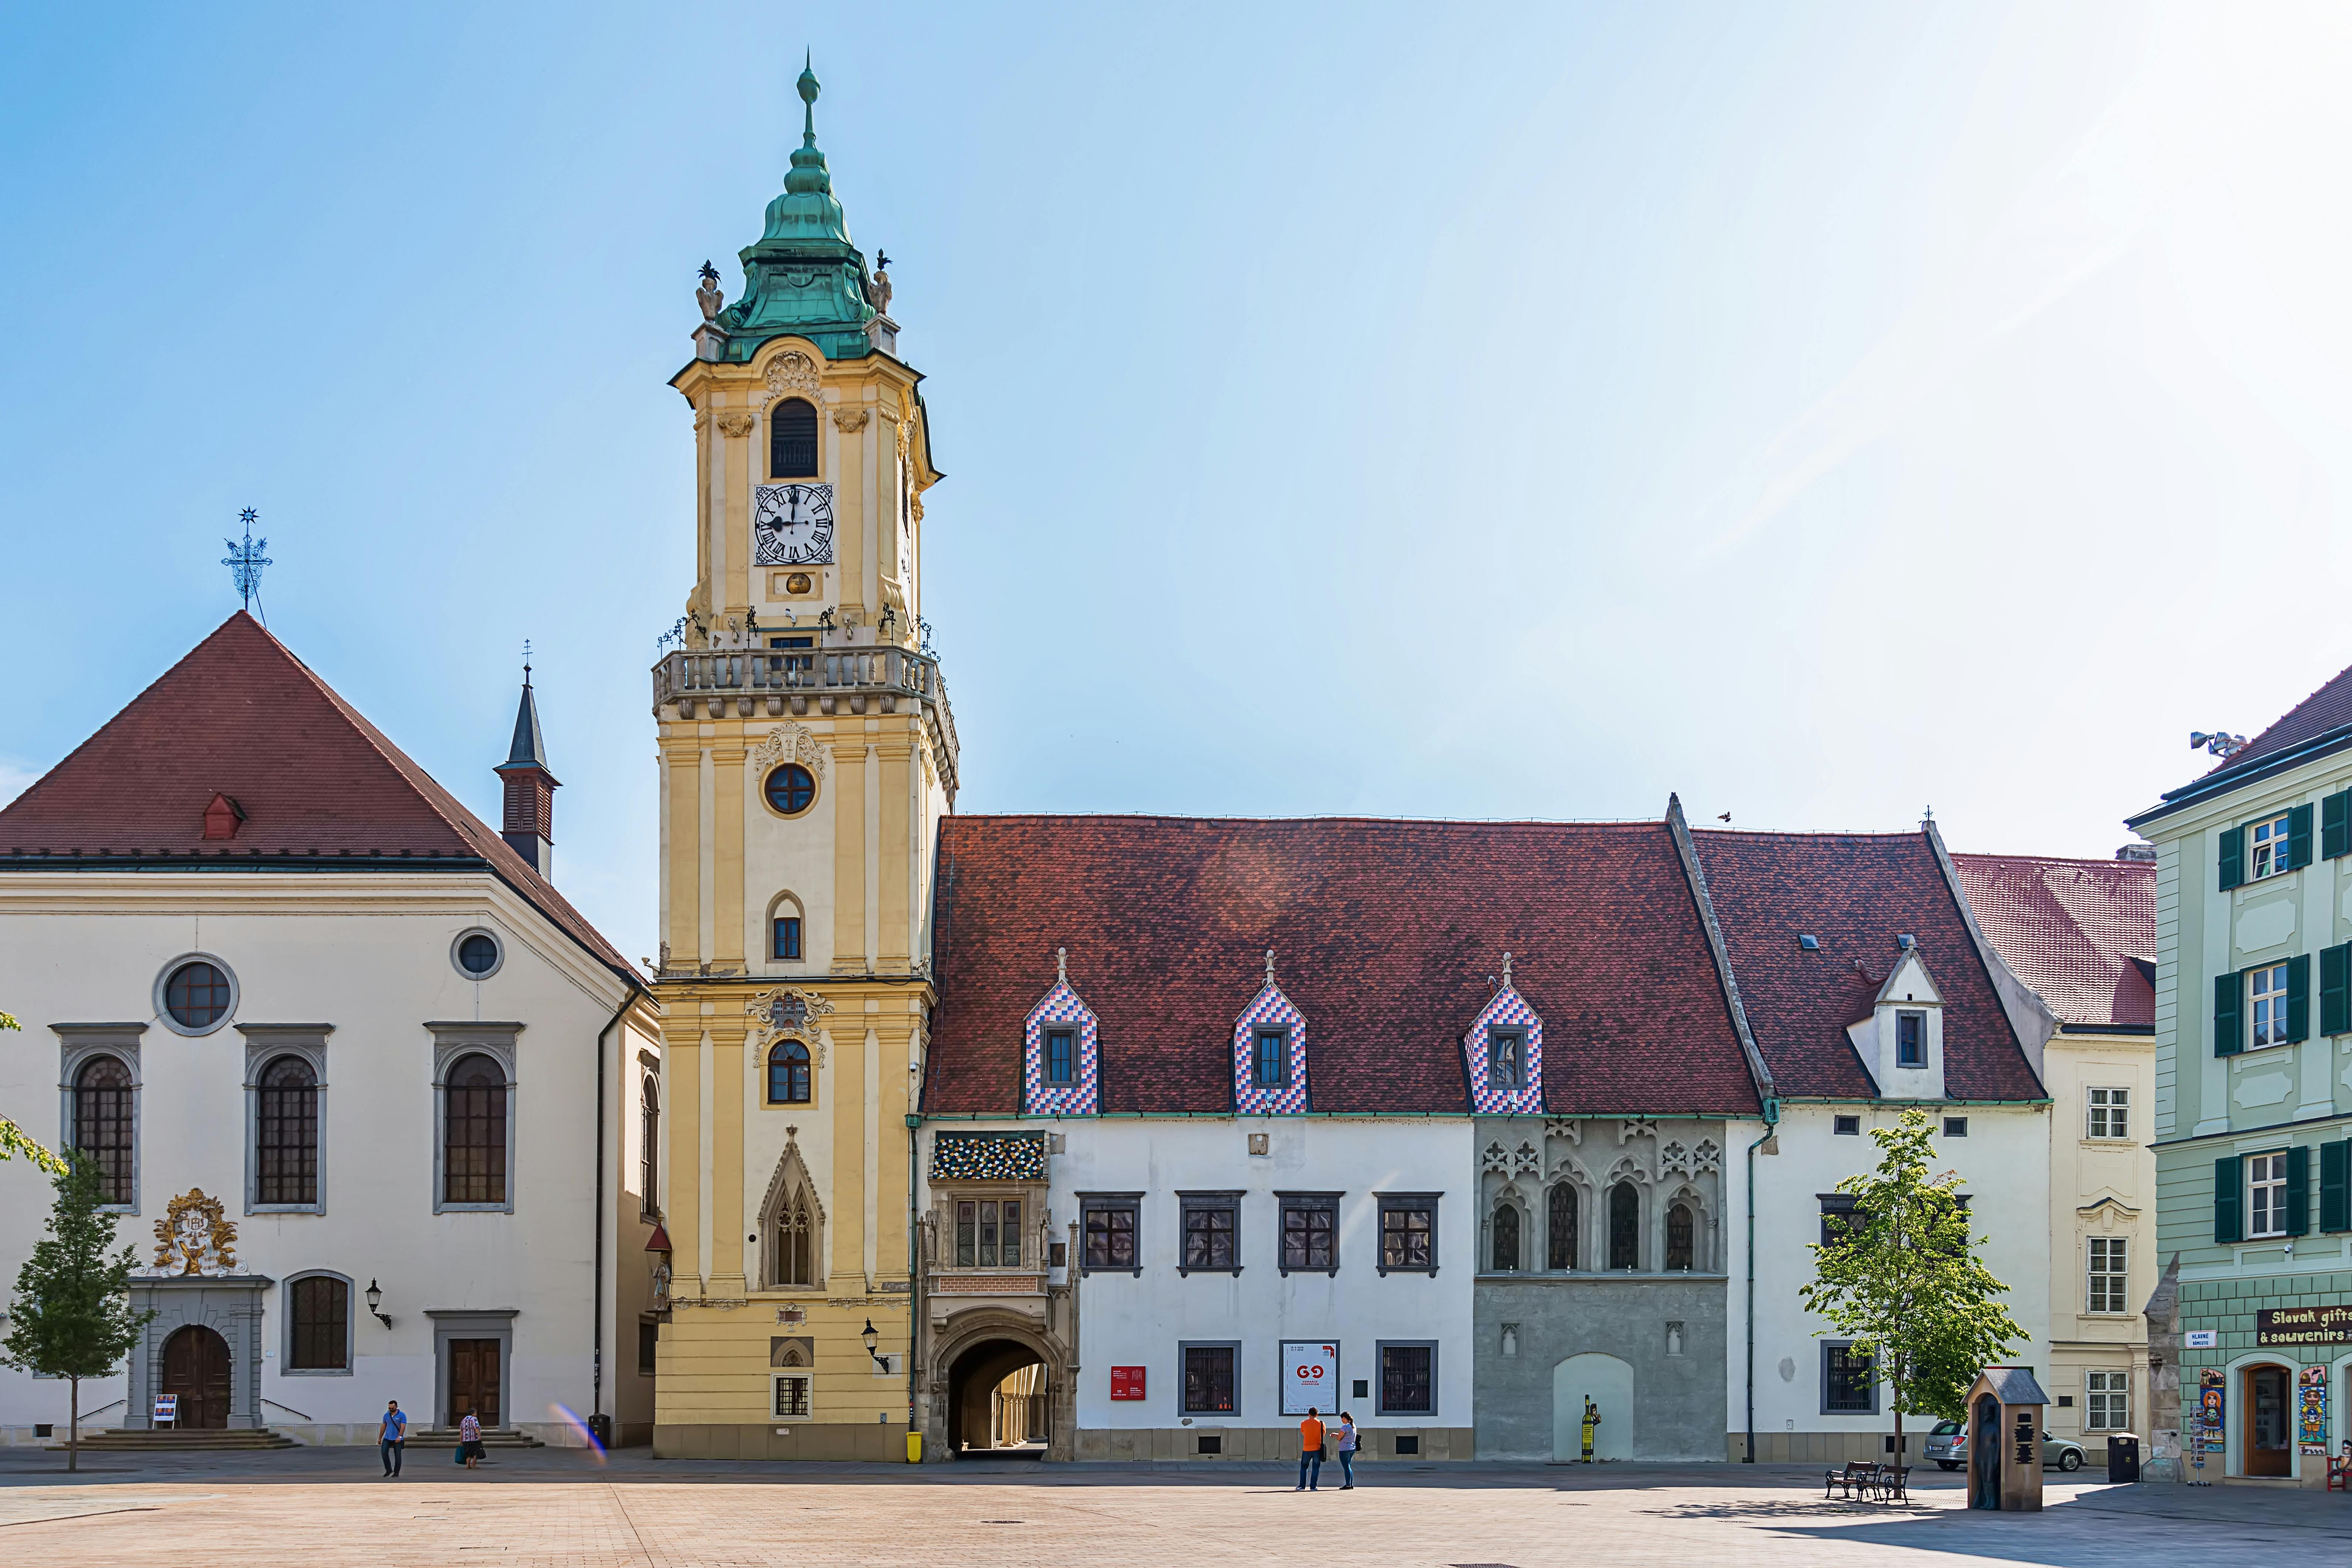 Bratislava Old Town Hall